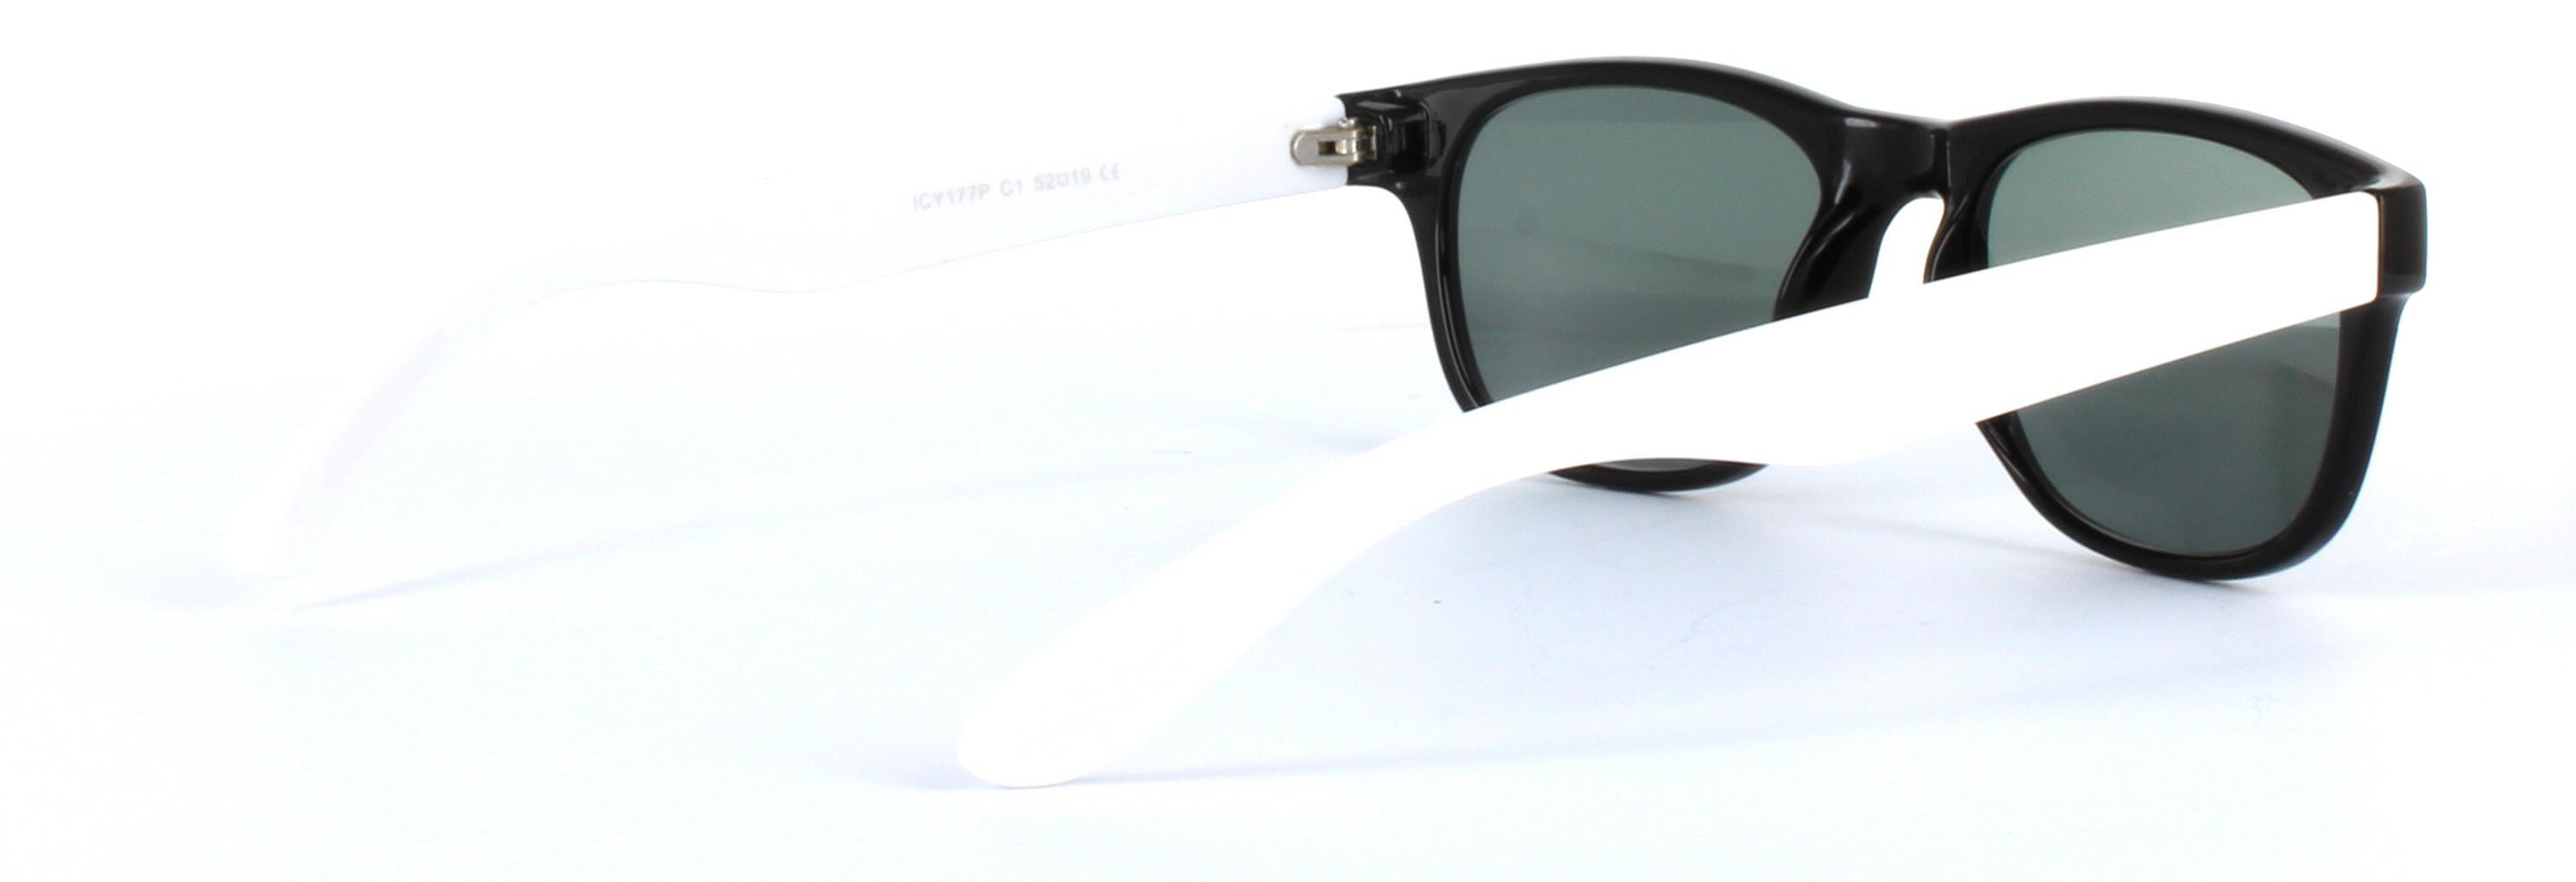 Brazil Black and White Full Rim Oval Plastic Sunglasses - Image View 4